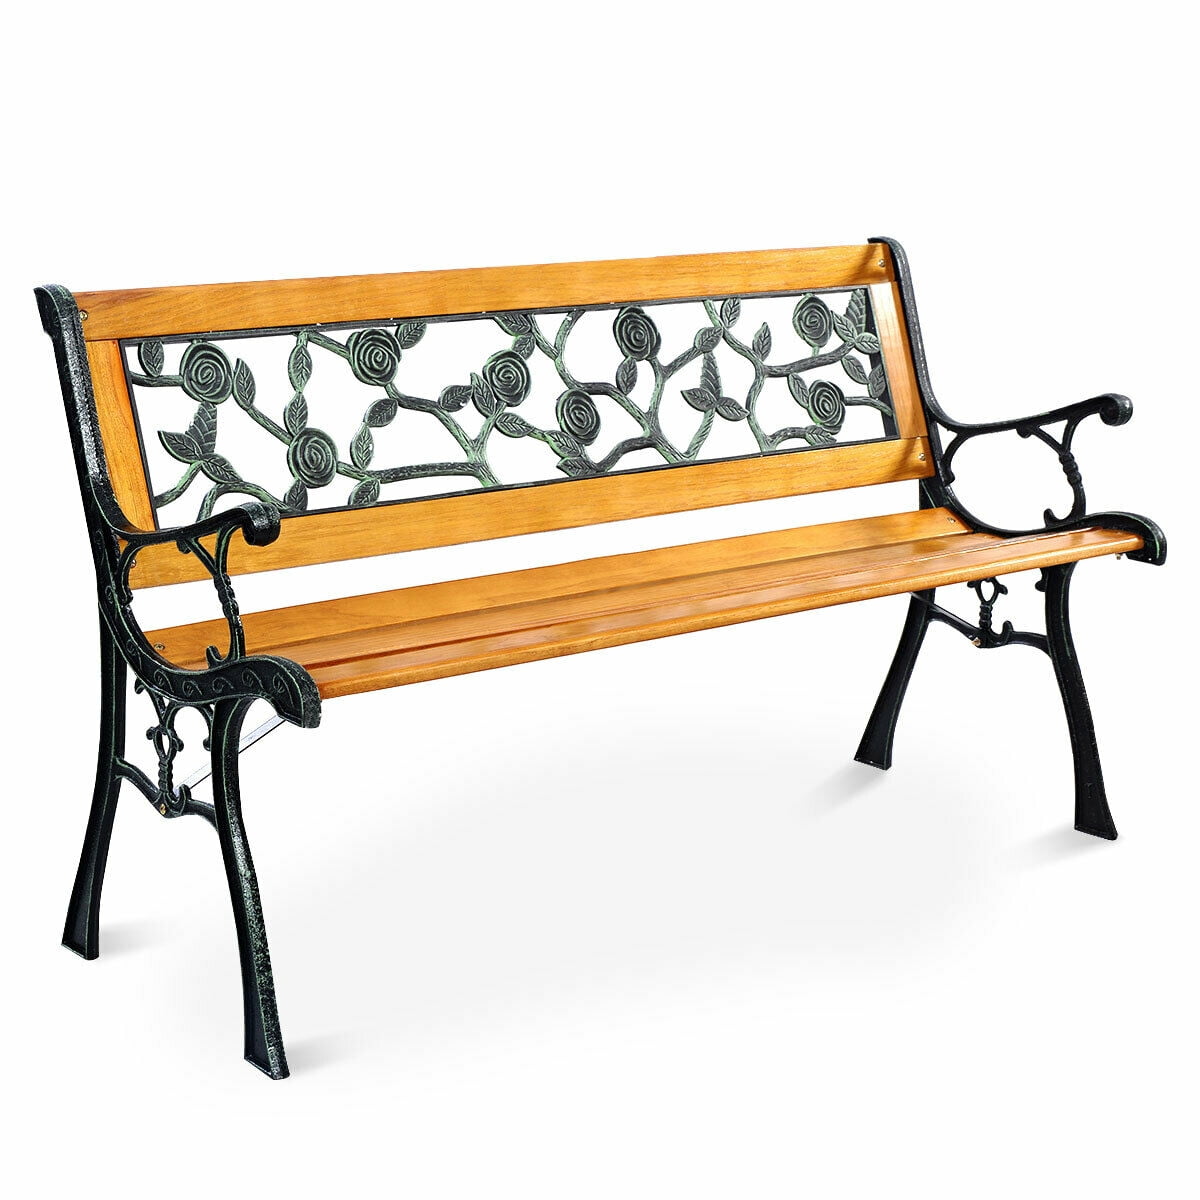 44.5 /"  Garden Bench Porch Patio Park Furniture Iron School Lawn Seat Chair NEW